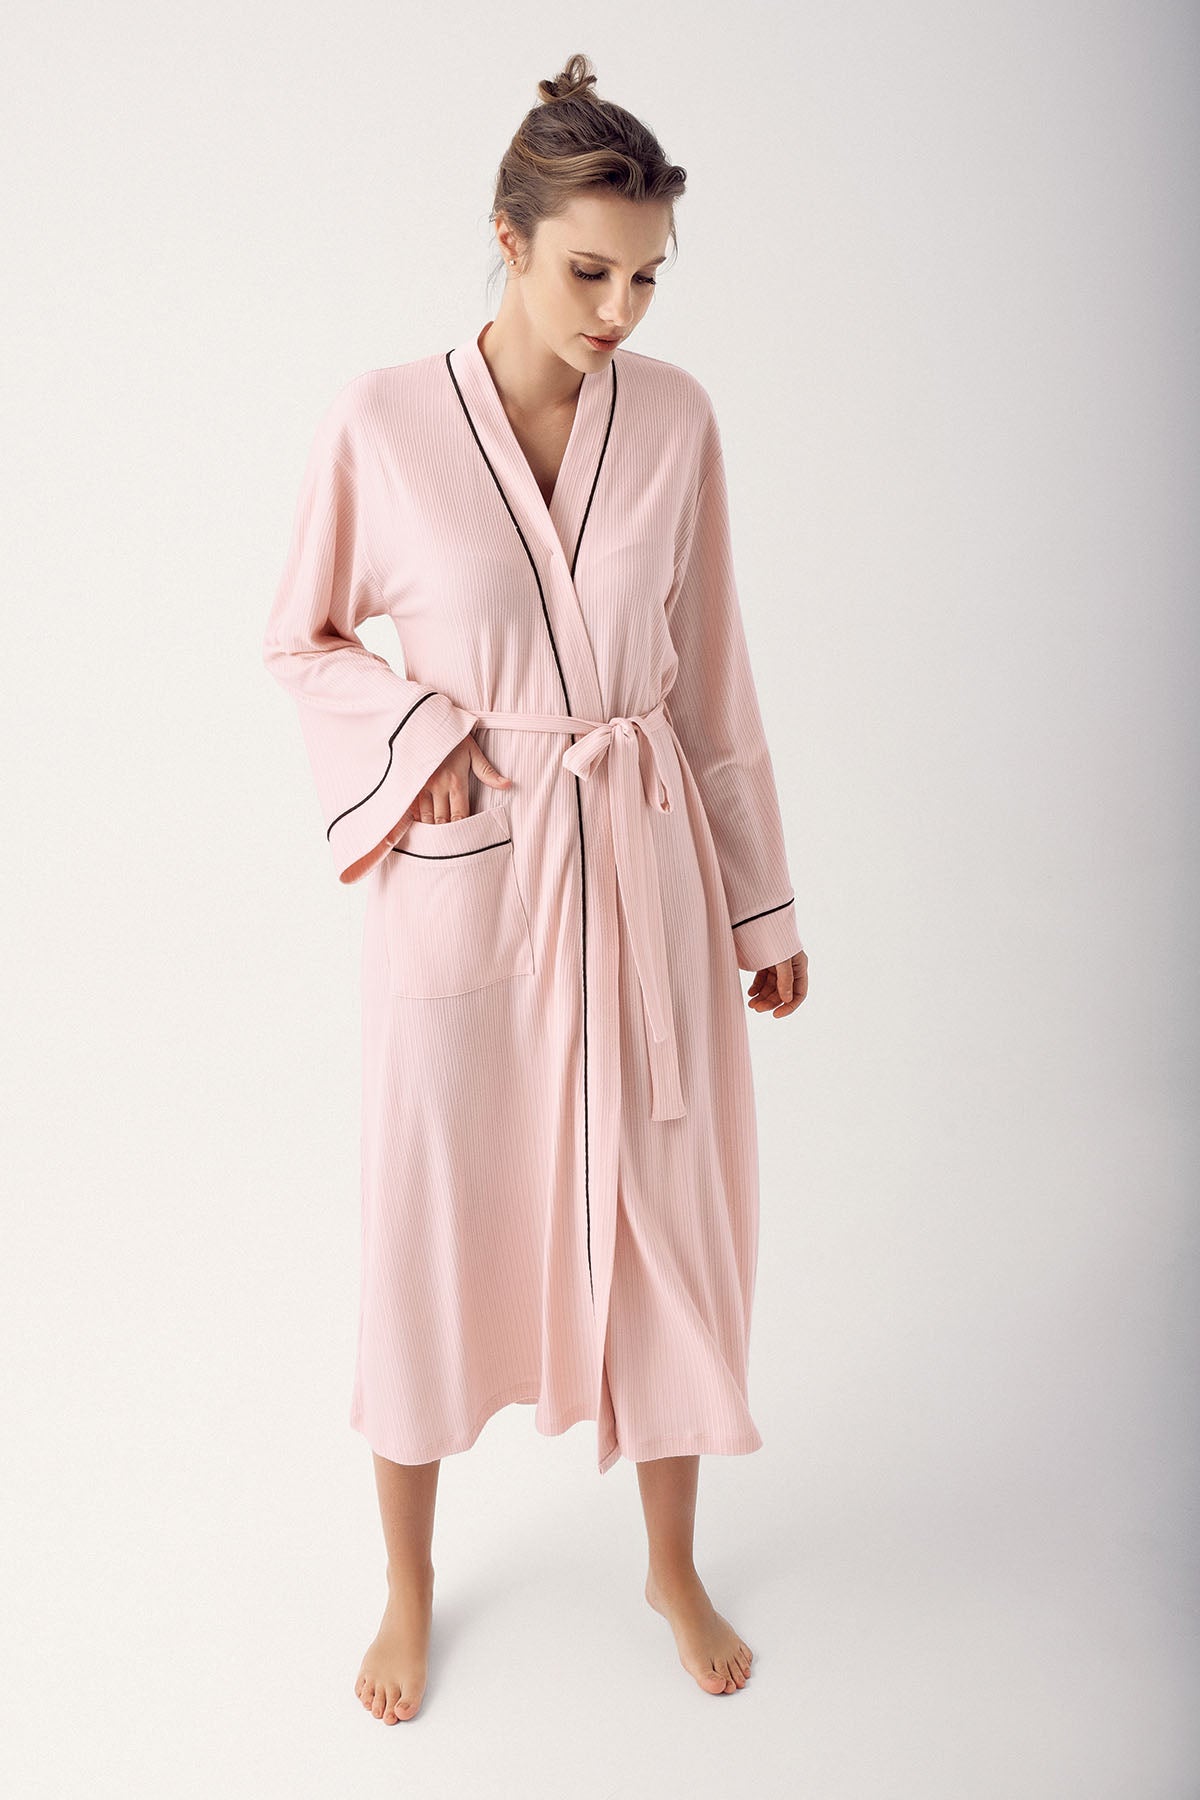 Shopymommy 14502 Striped Maternity Robe Pink